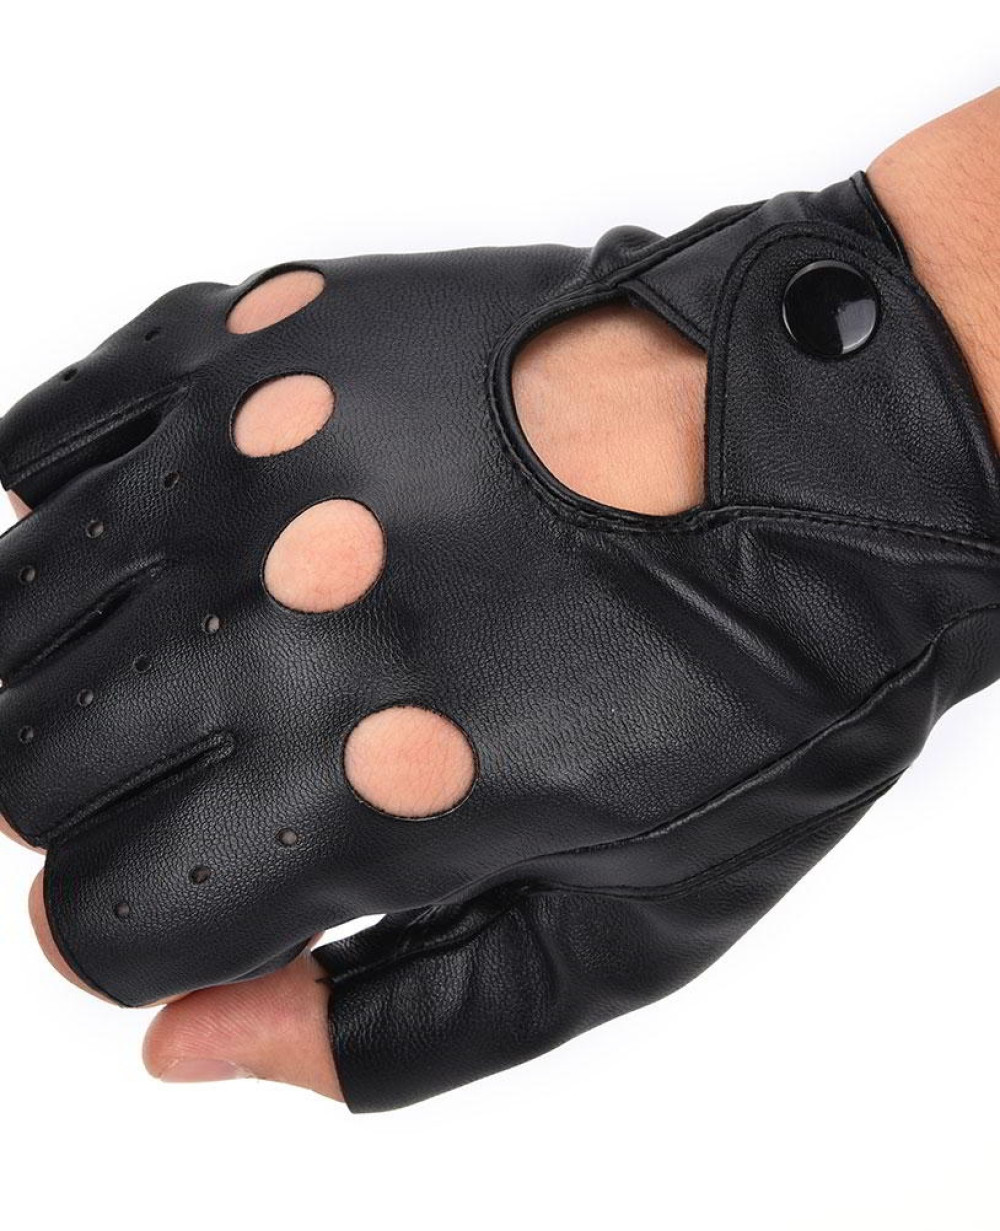 Women Unlined Genuine Leather Driving Fashion Gloves MEDIUM, BLACK